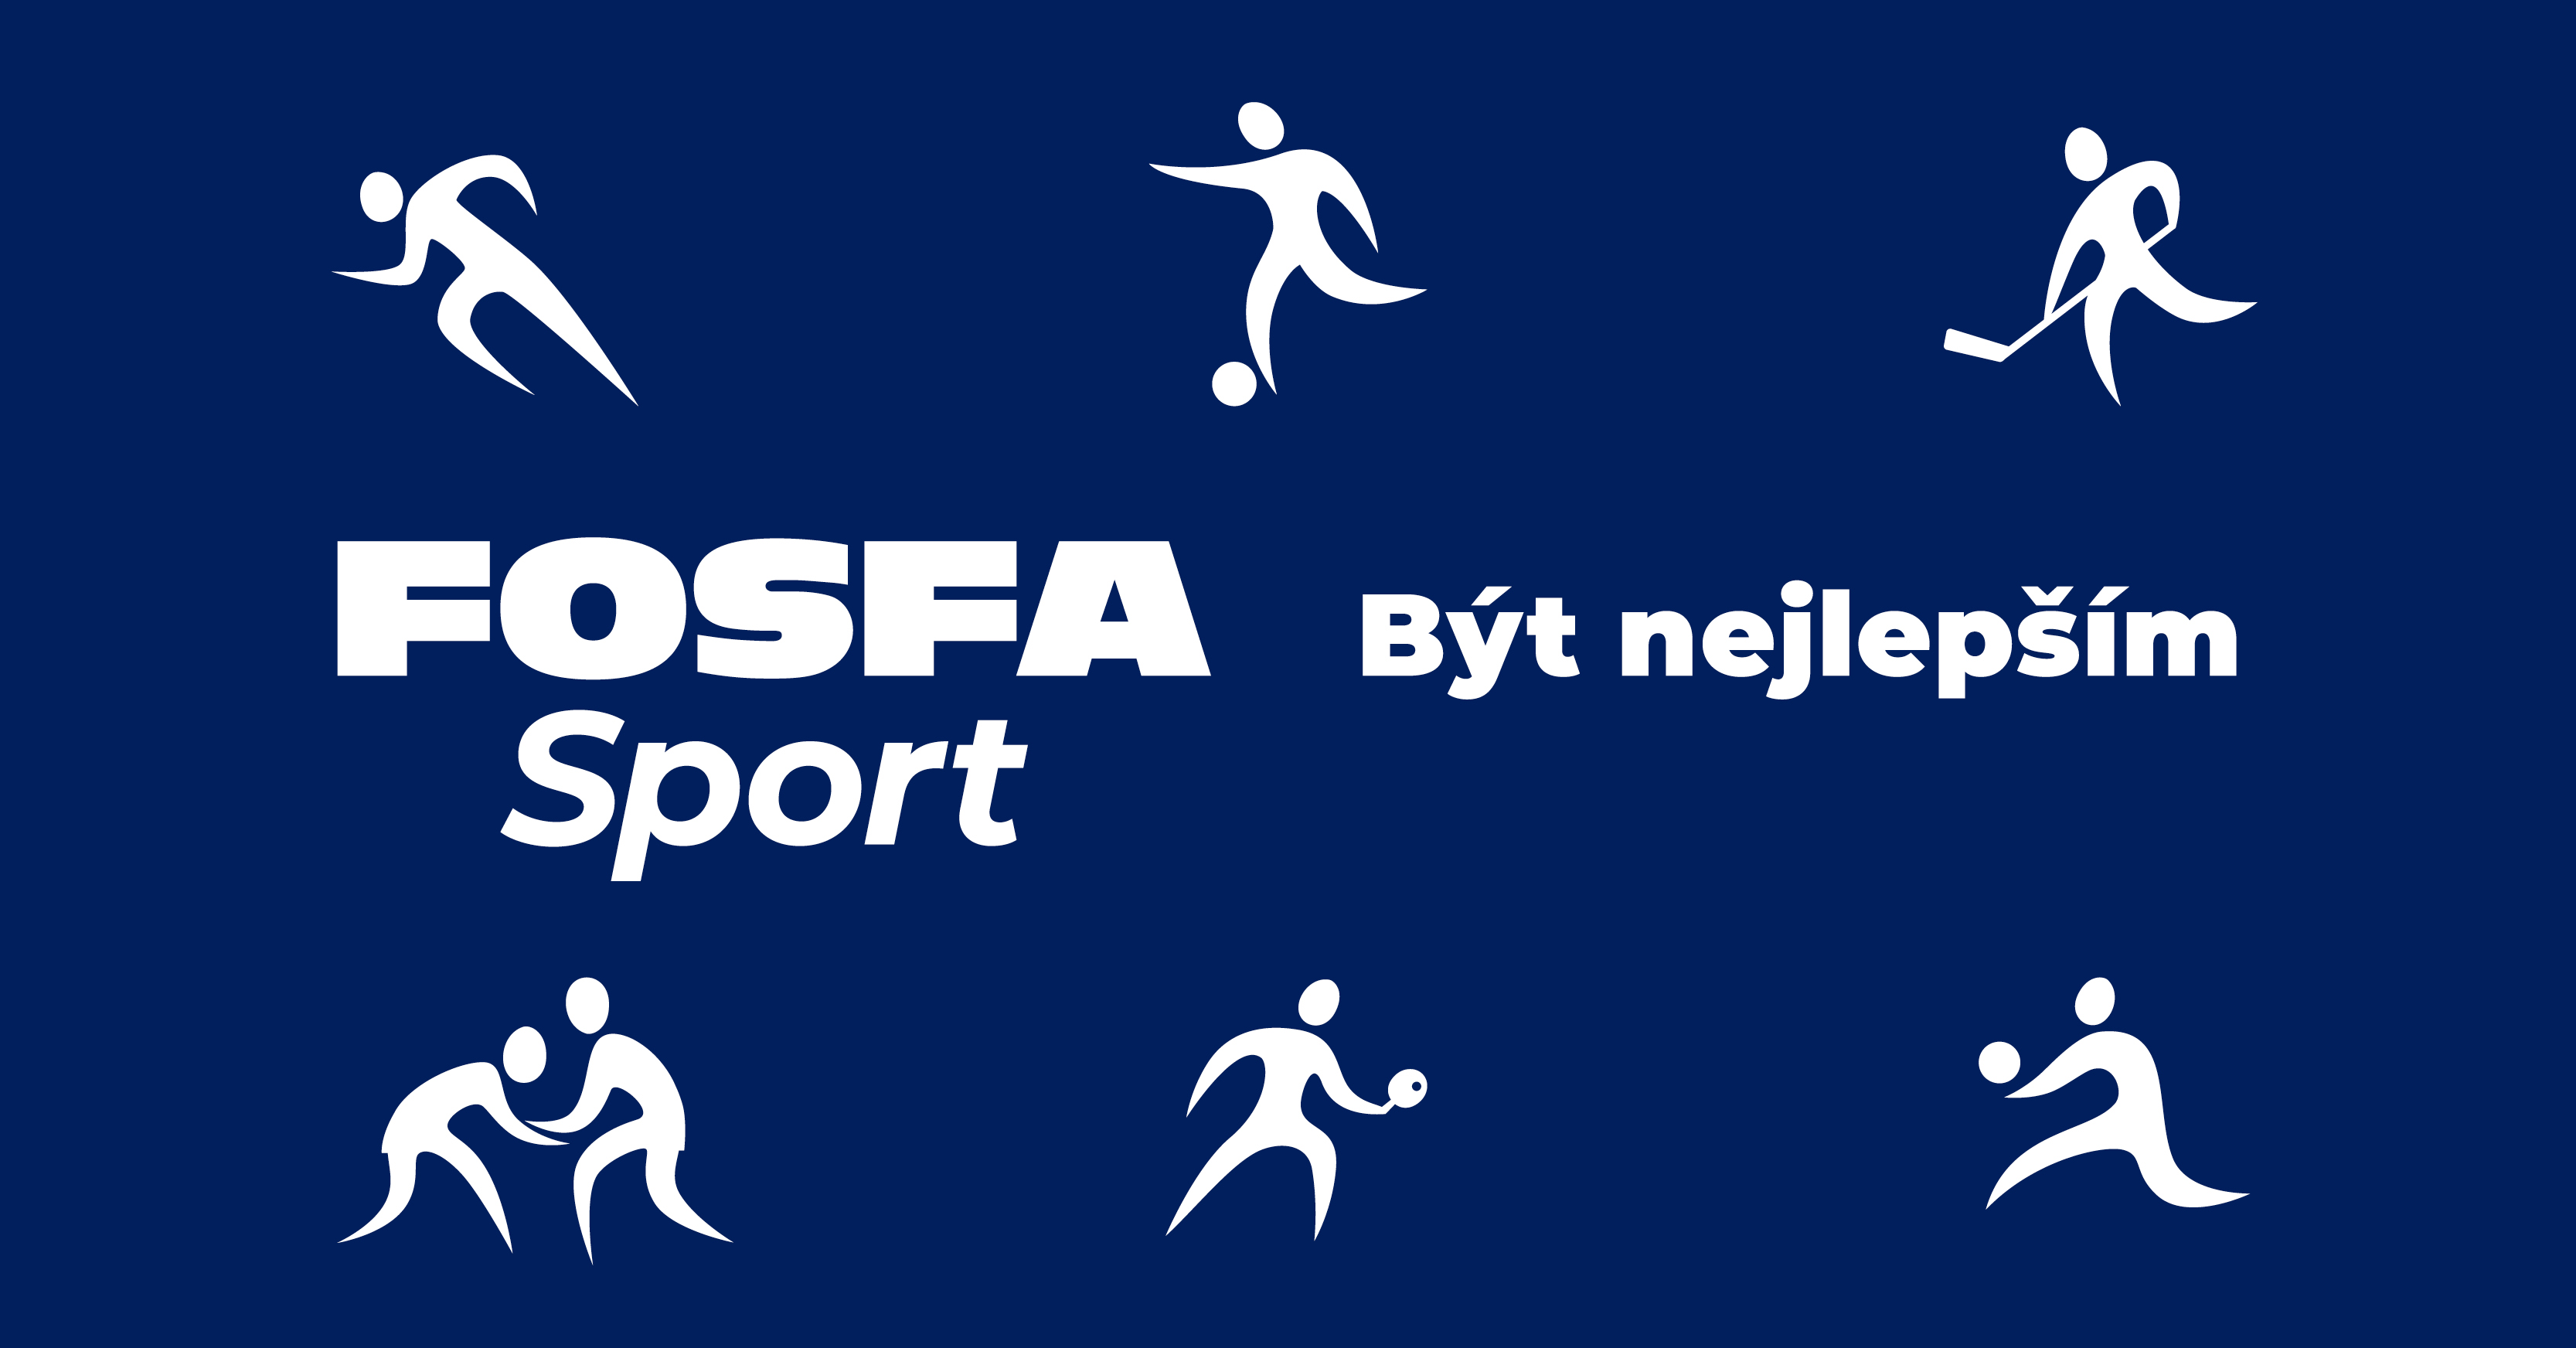 FOSFA Sport 1200x628